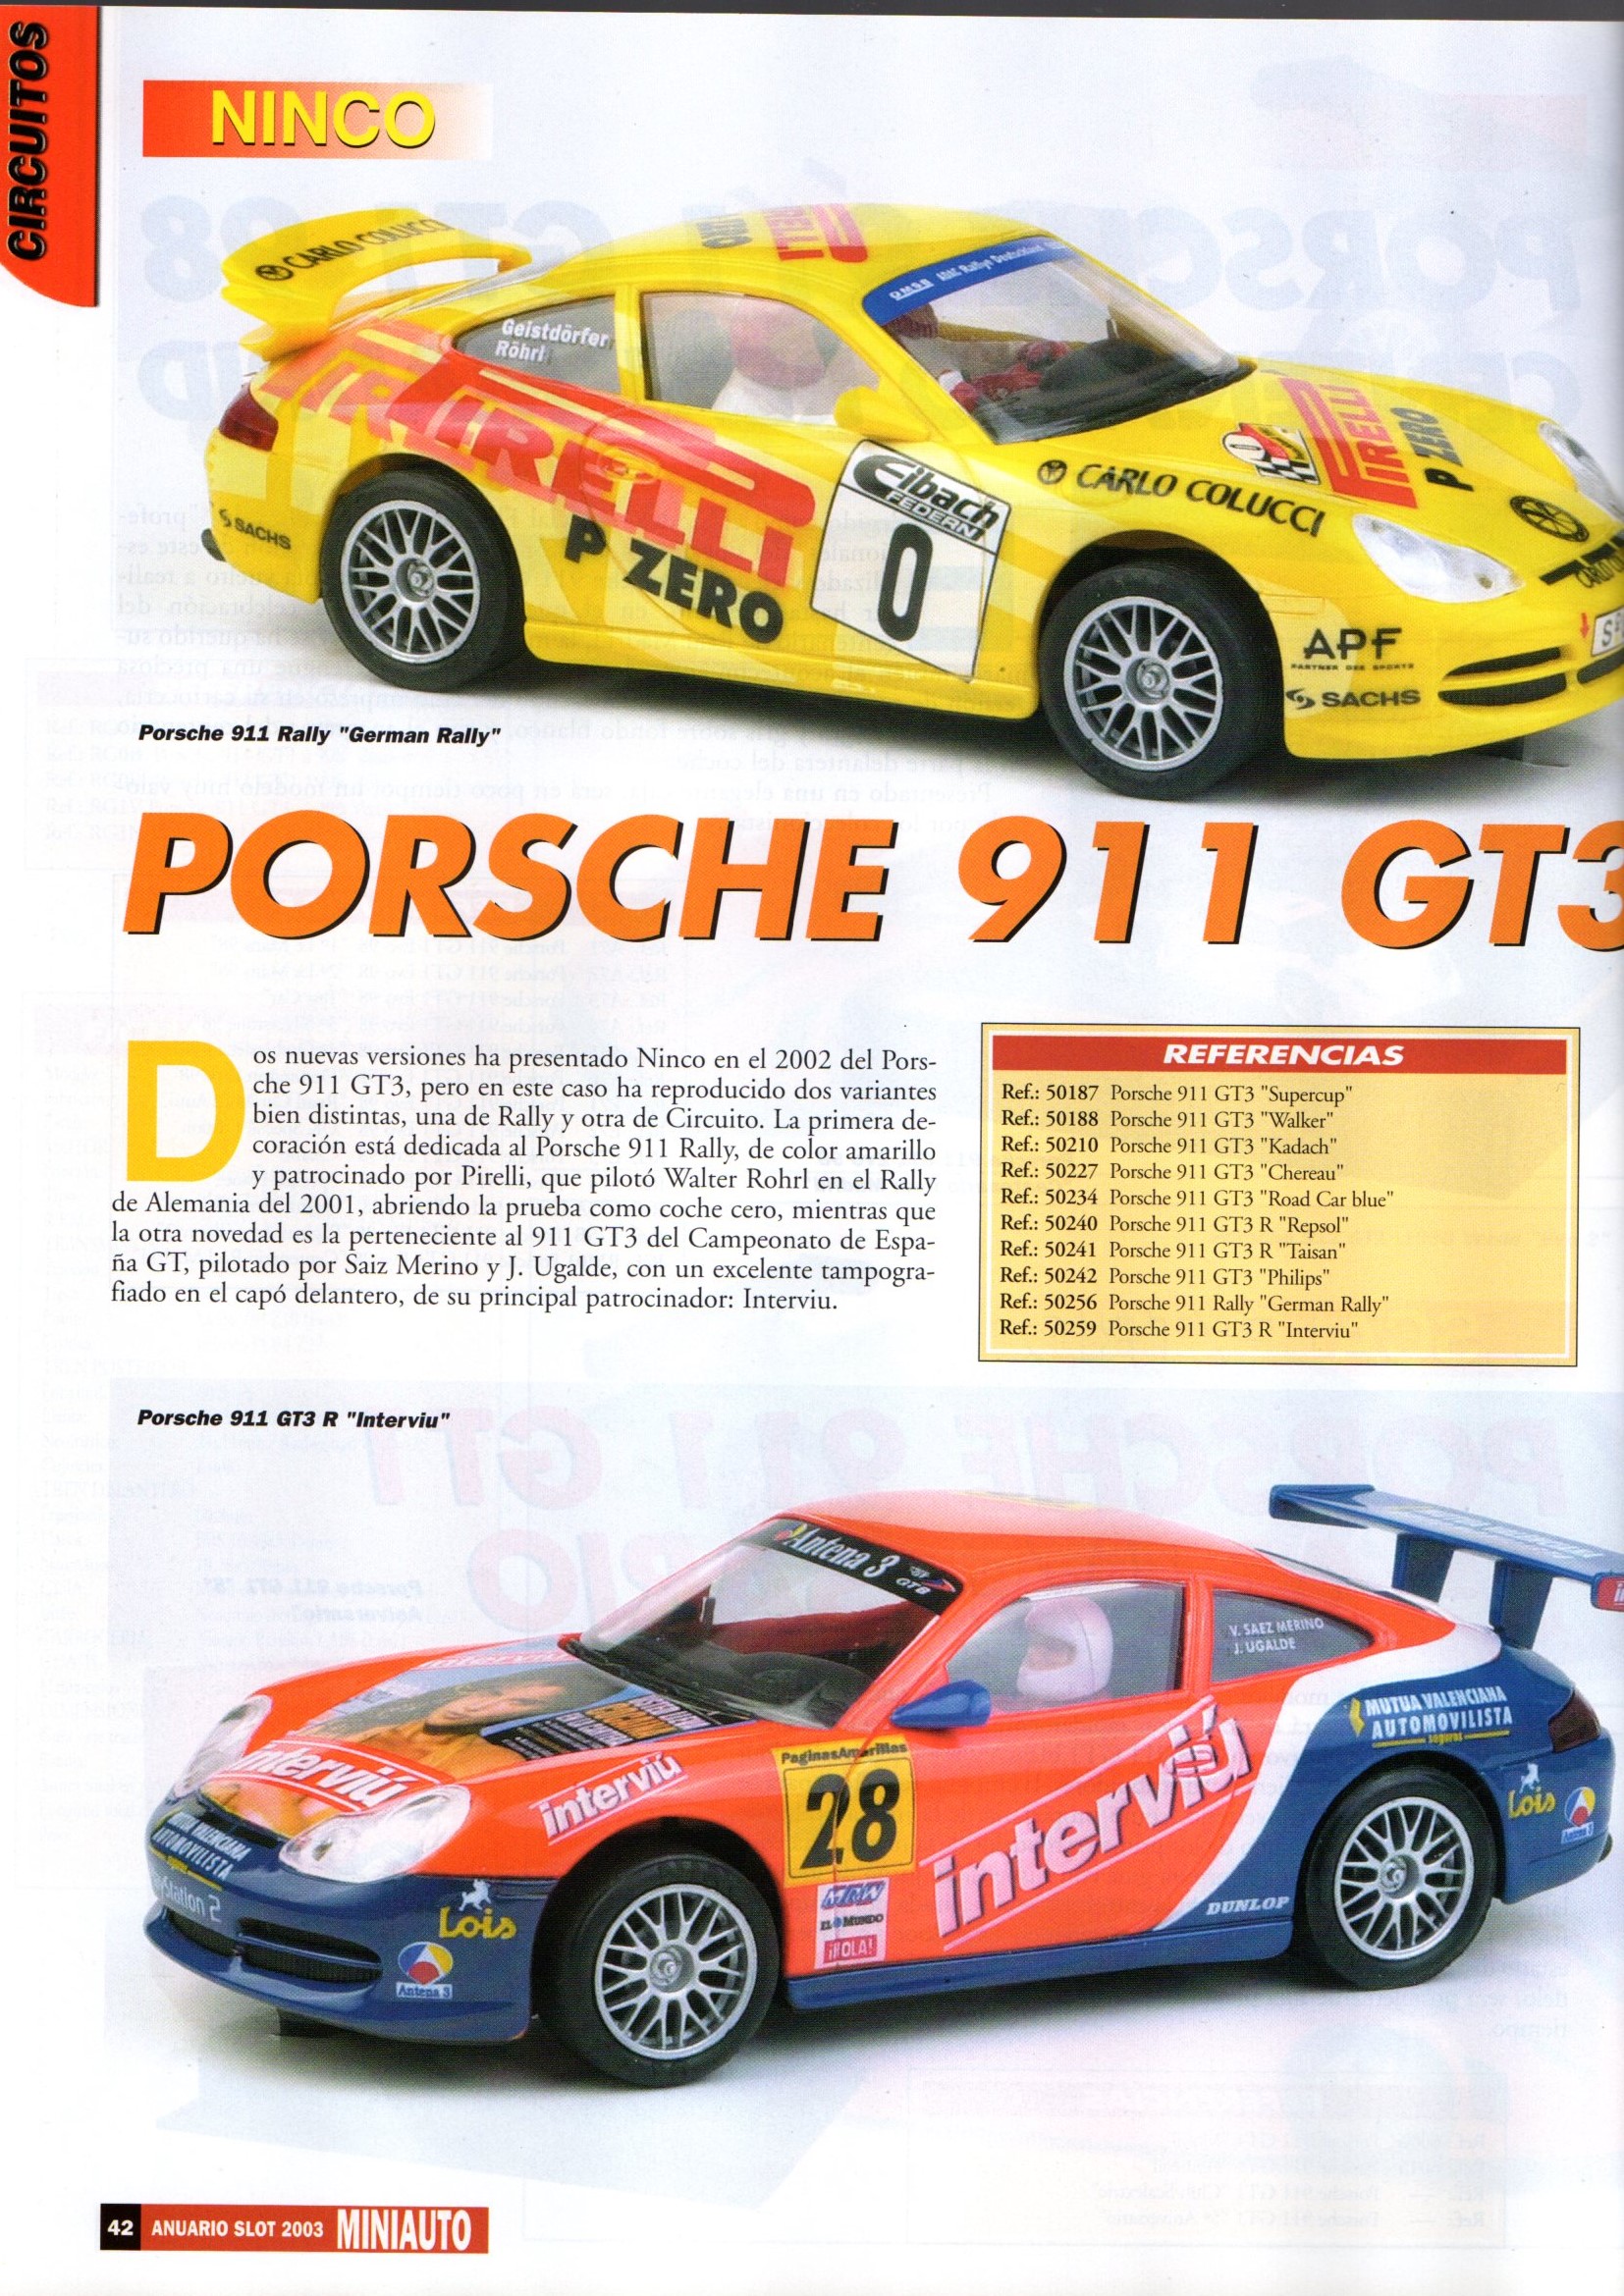 Porsche 911 GT3 R (50241